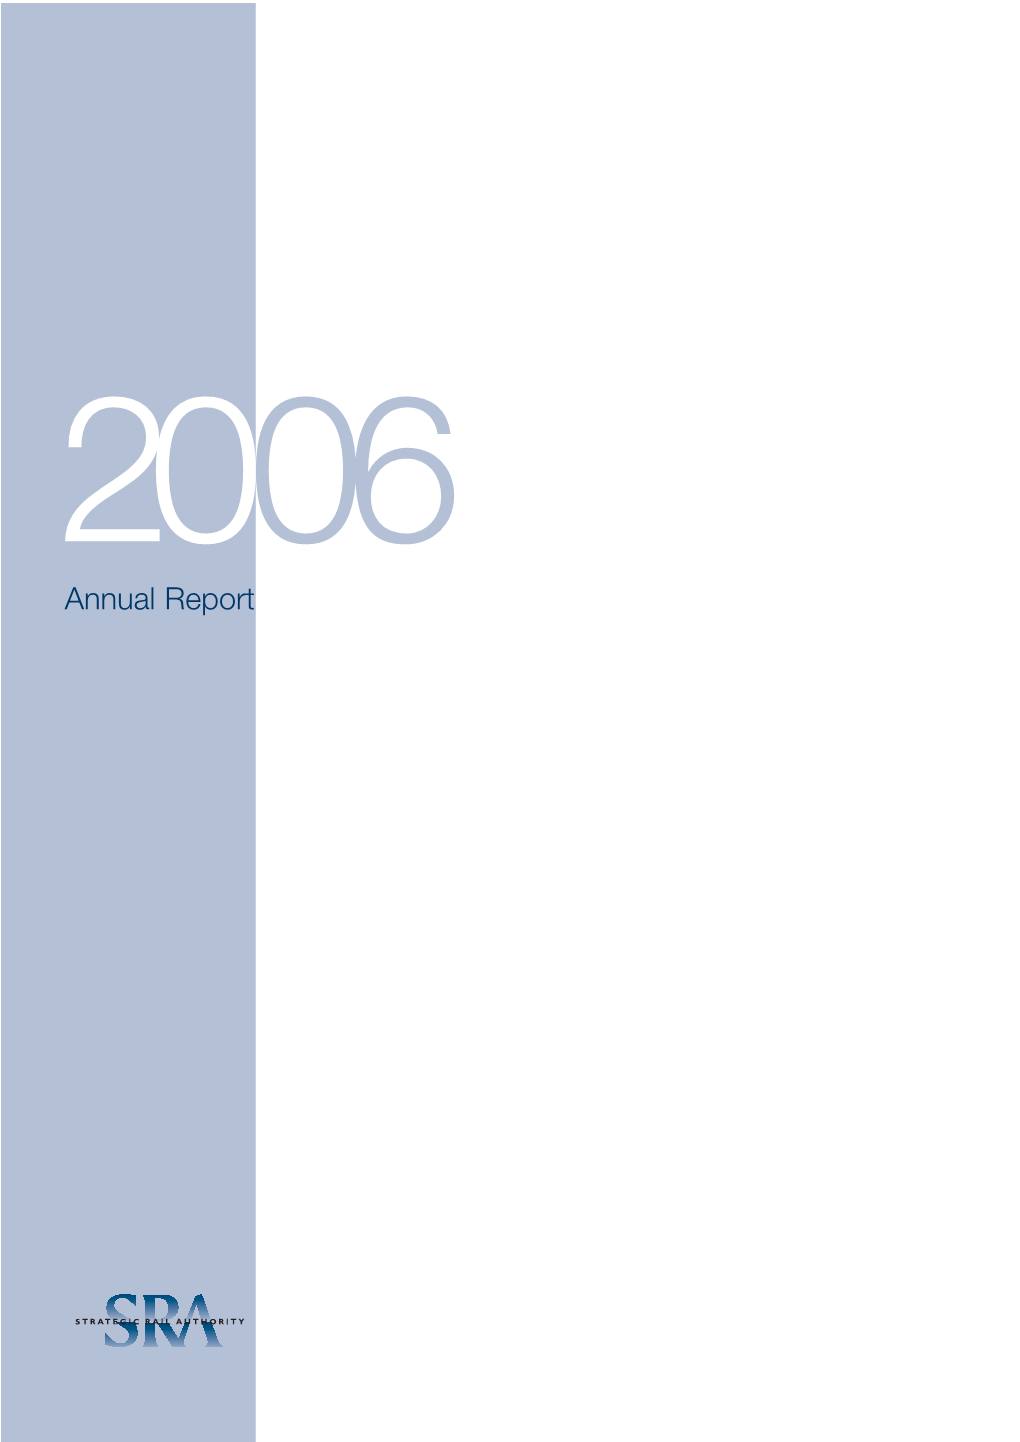 Strategic Rail Authority Annual Report 2006